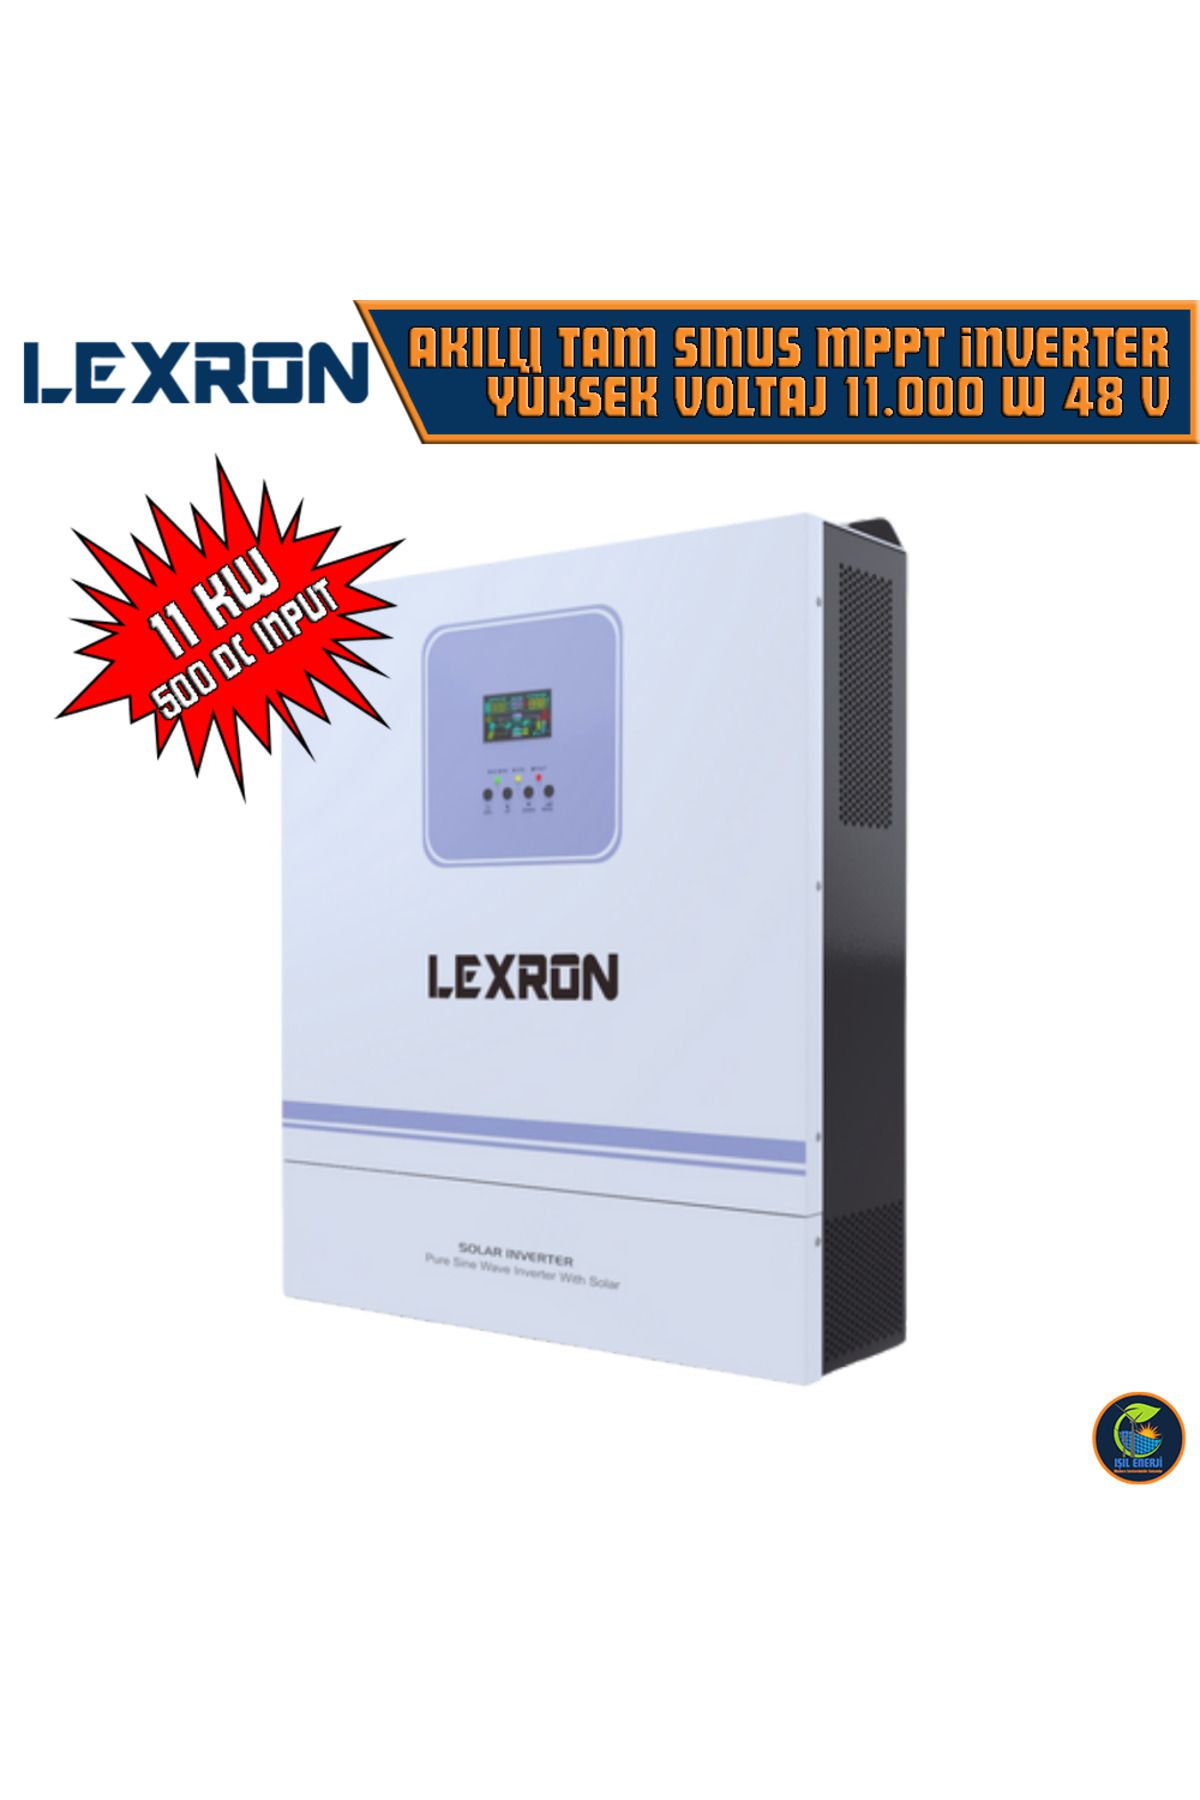 Lexron Akıllı Tam Sınus Mppt Yüksek Voltaj 11000 Watt 48 Volt - 11kw 48v -